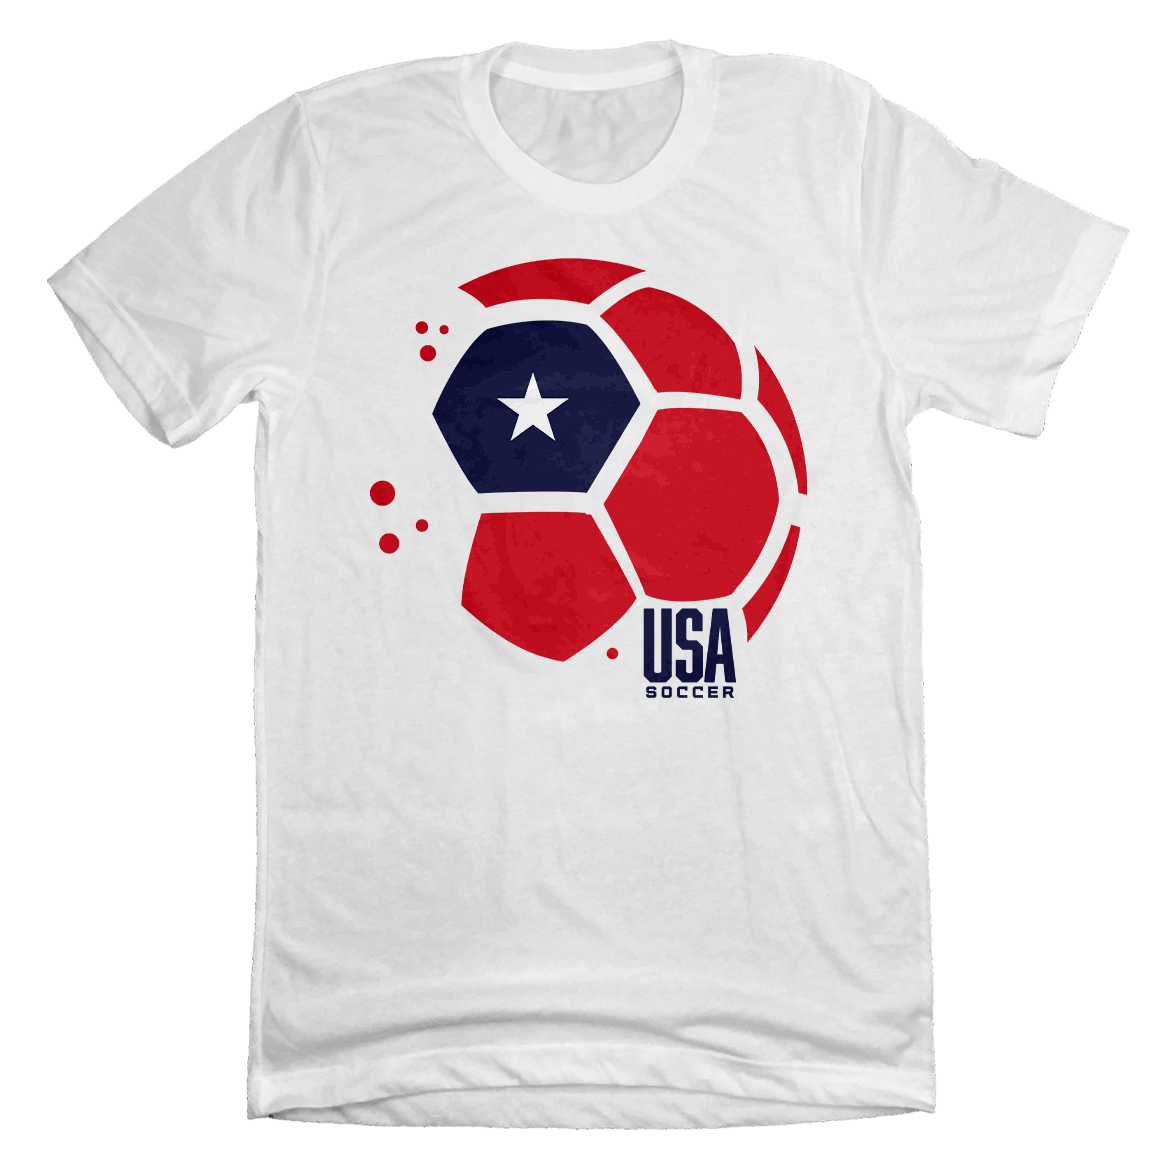 USA Soccer Ball white t-shirt